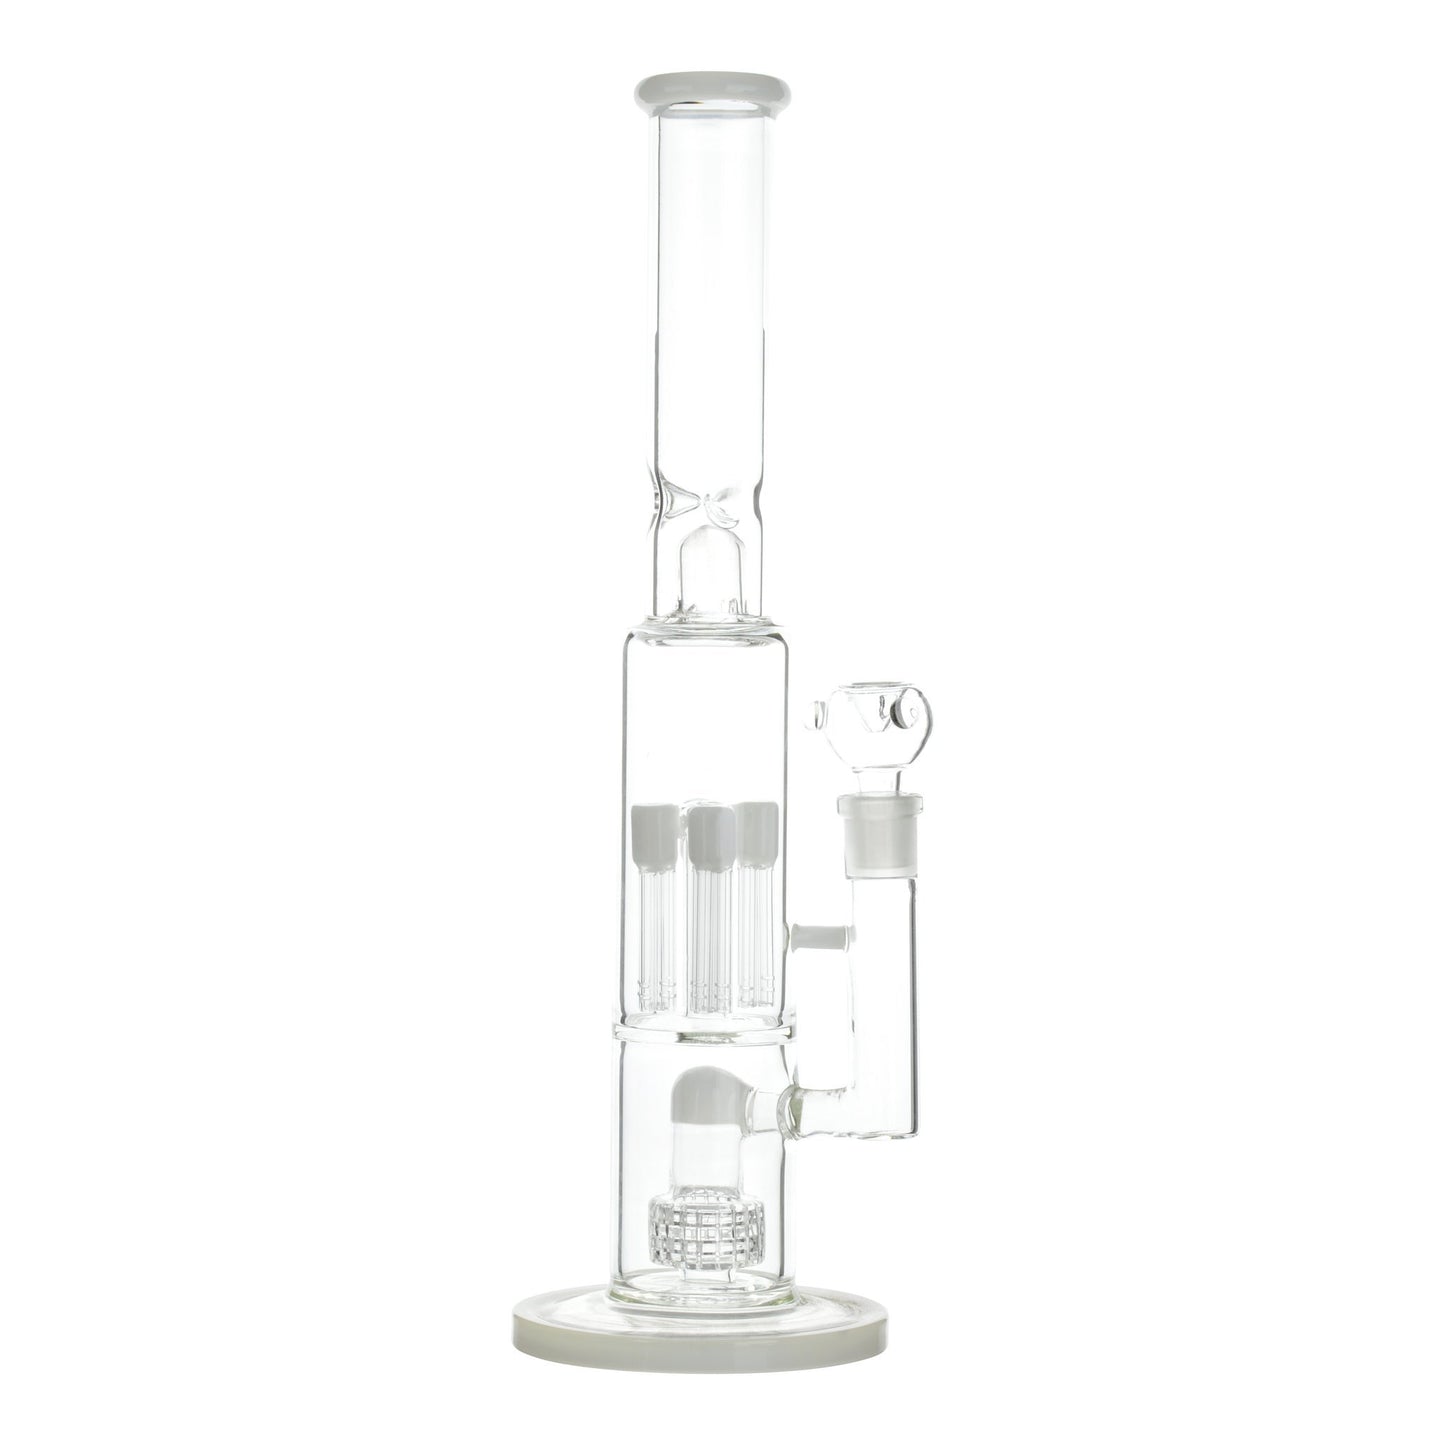 White Huge 17-inch glass quad octo percolated bong smoking device 4 tree percs, matrix perc and UFO perc sleek look